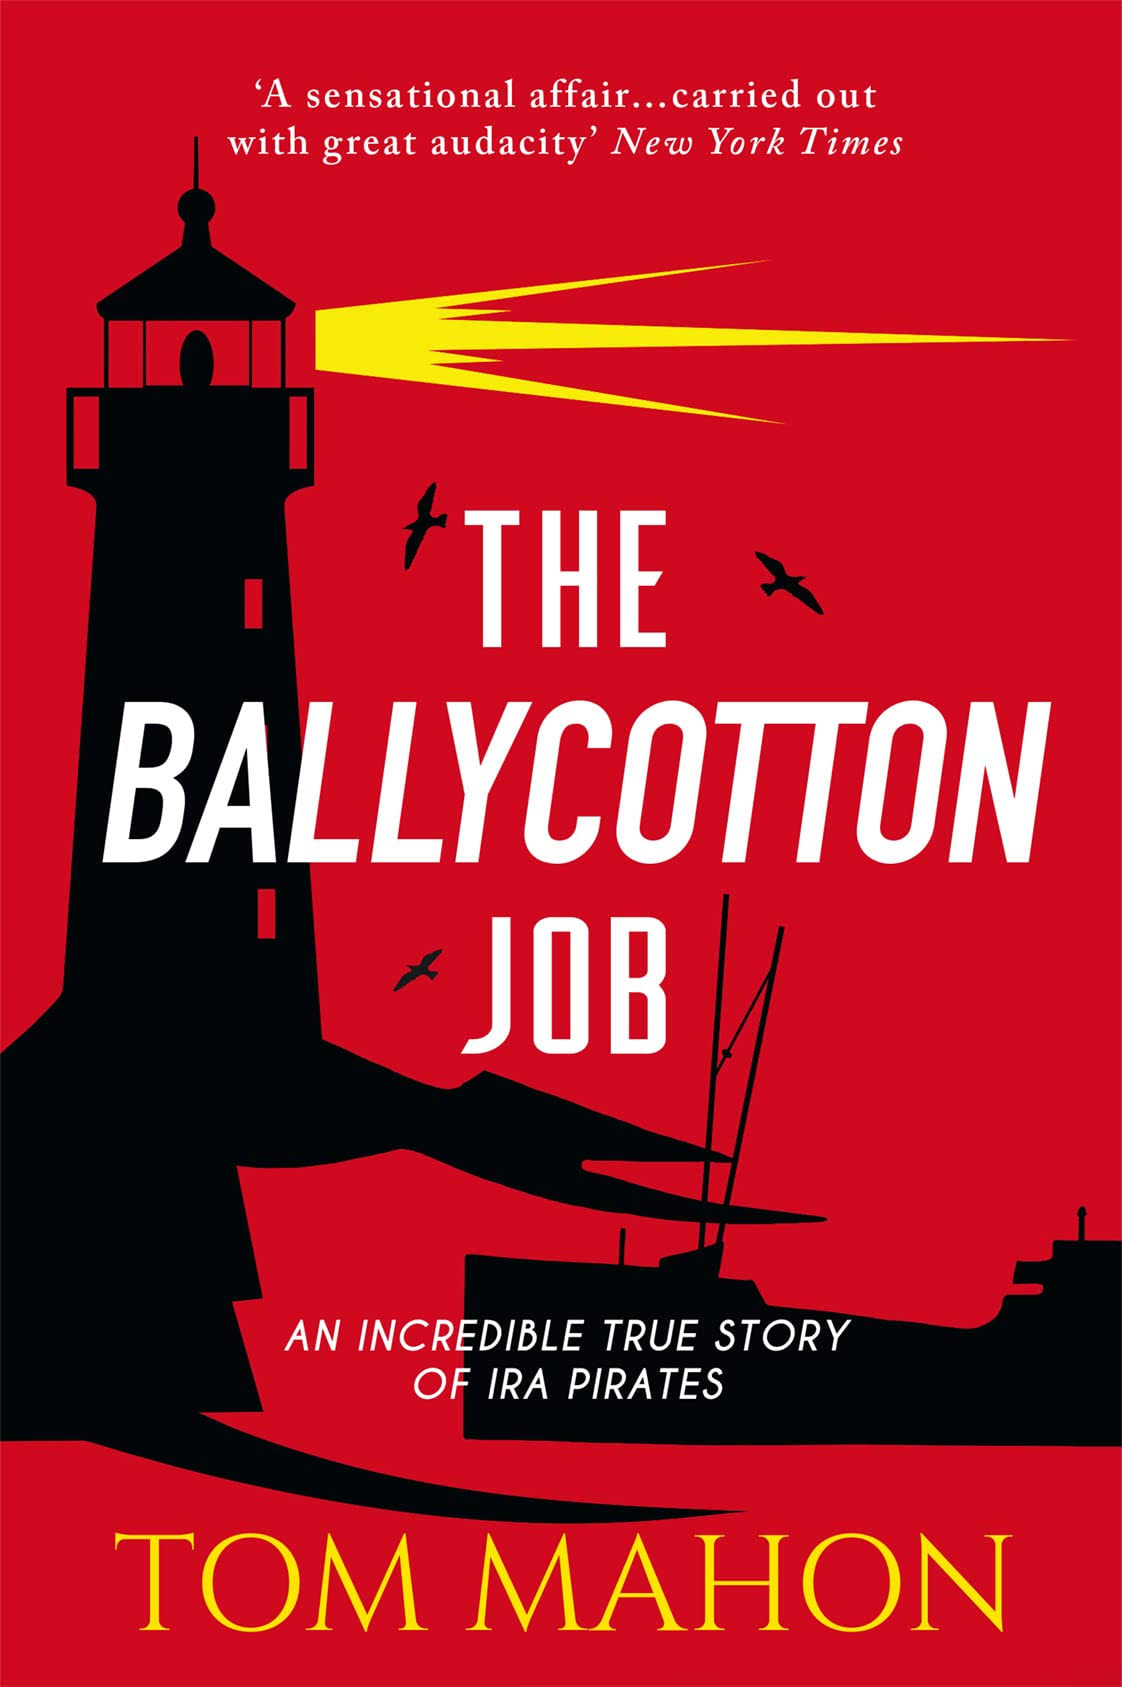 The Ballycotton Job by Tom Mahon